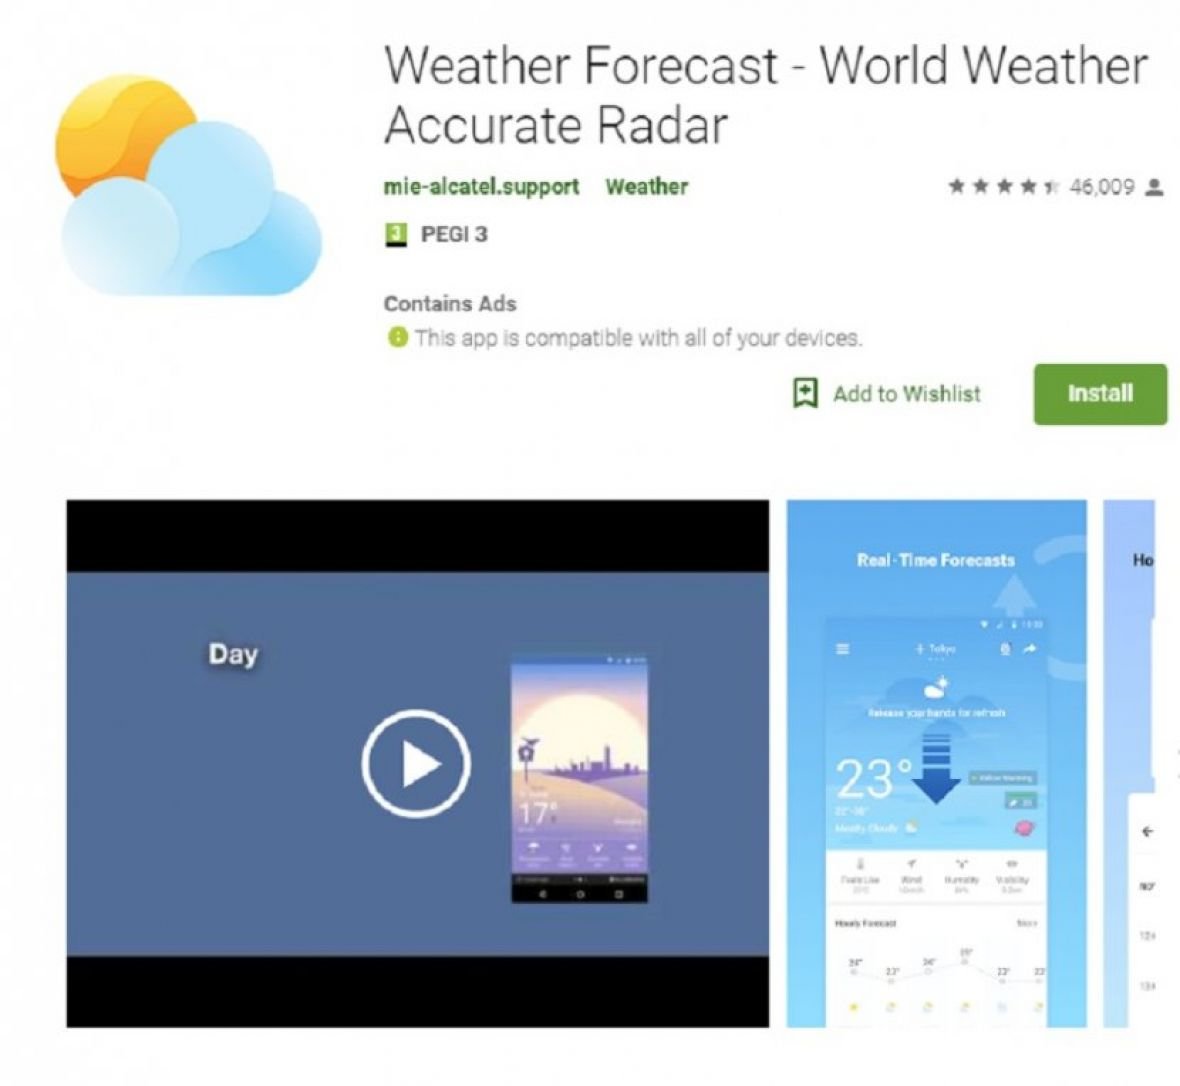 Aplikacija Weather Forecast - World Weather Accurate Radar - undefined